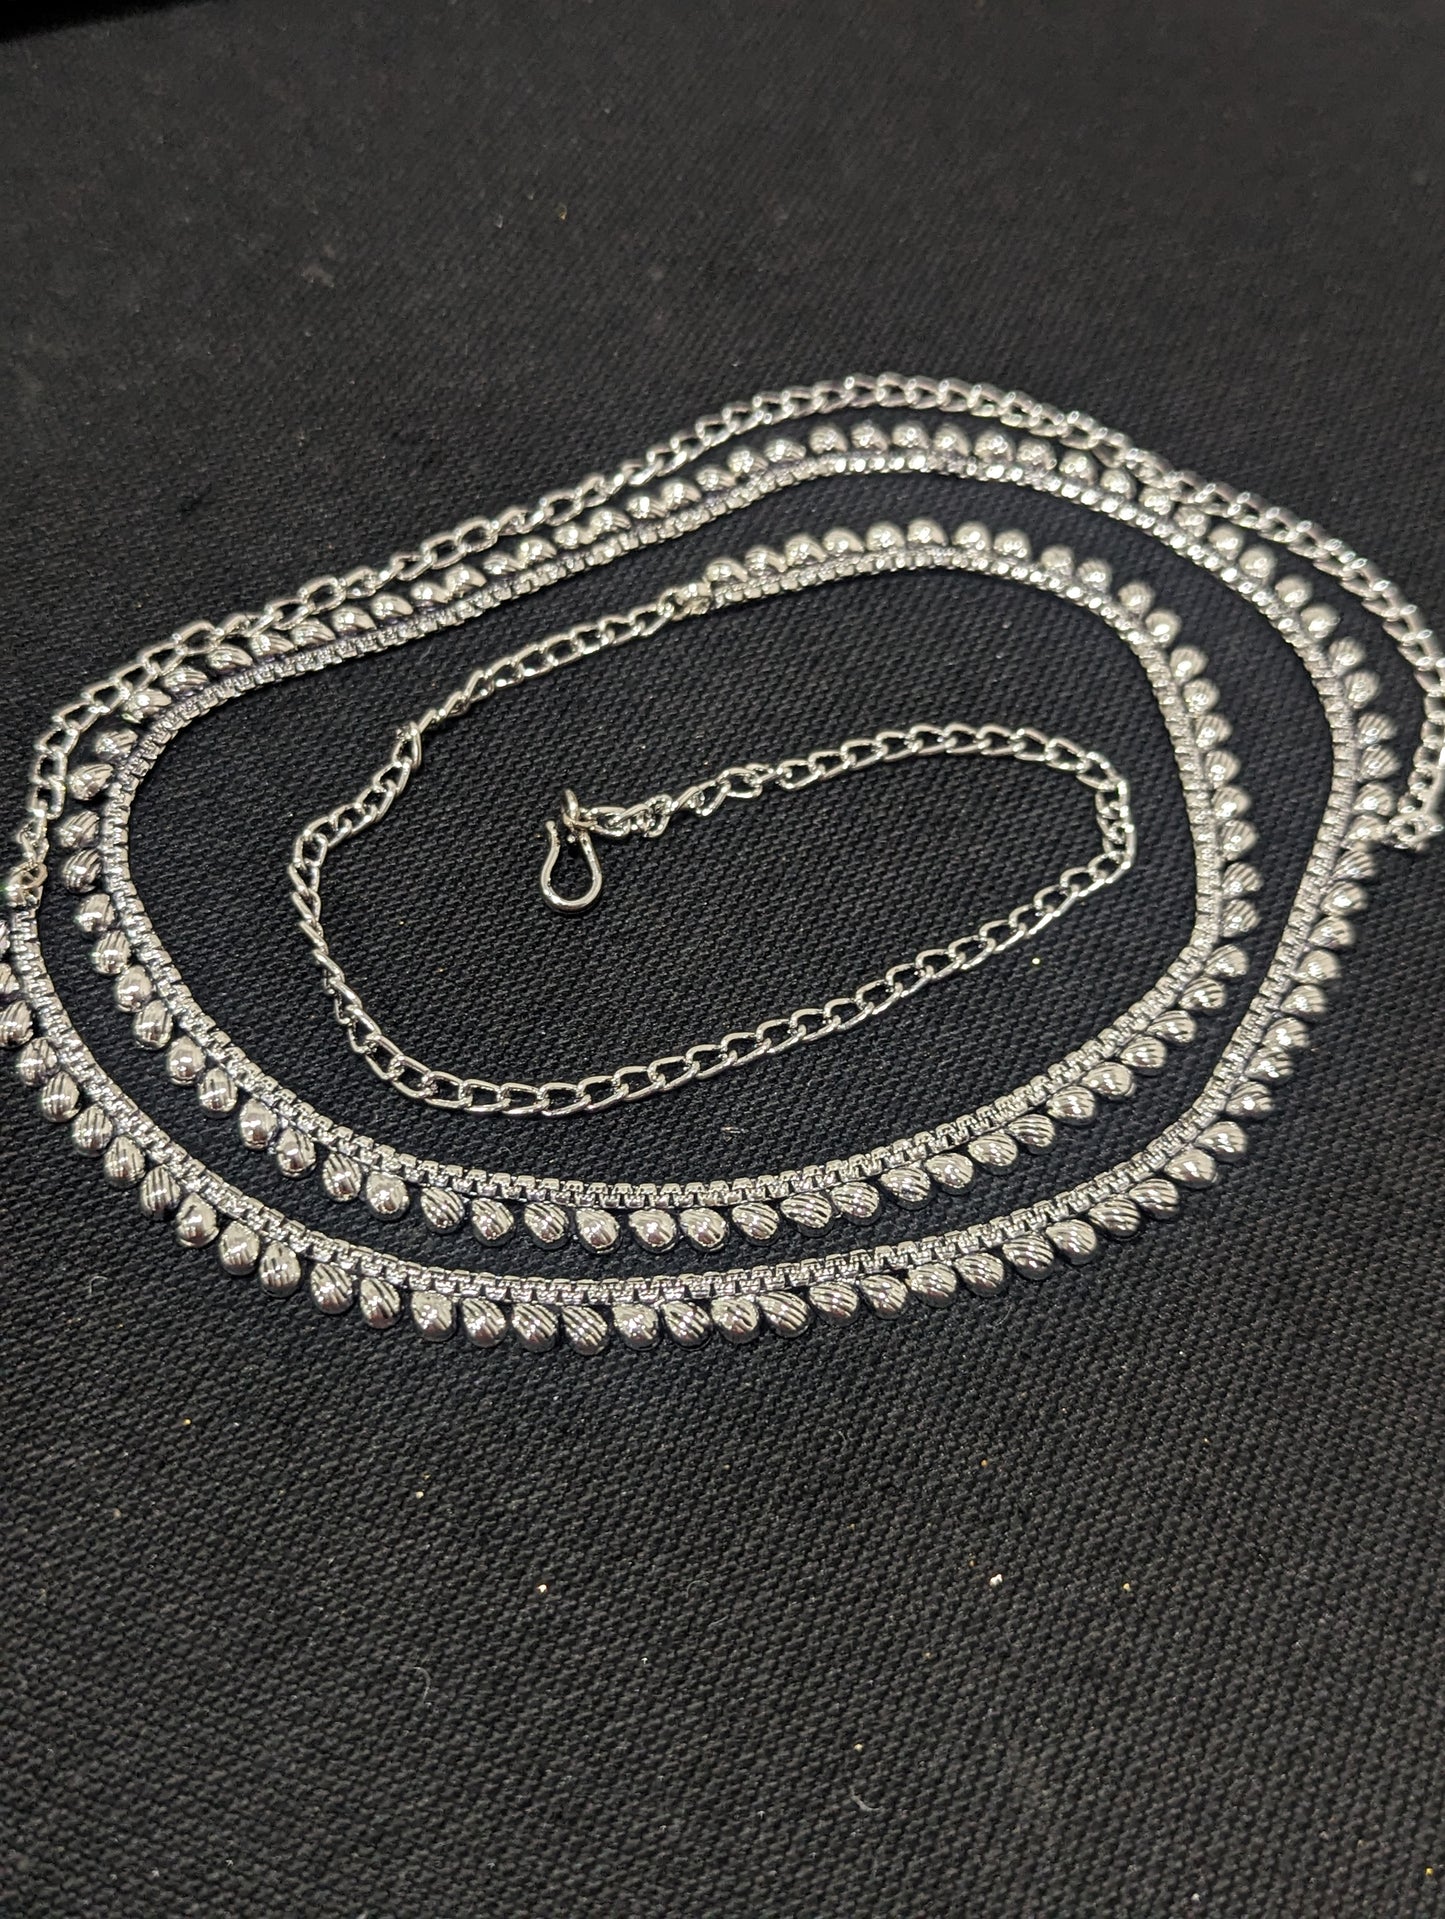 Oxidized Silver Hip Chain / Waist Belt / Belly Chain - D1